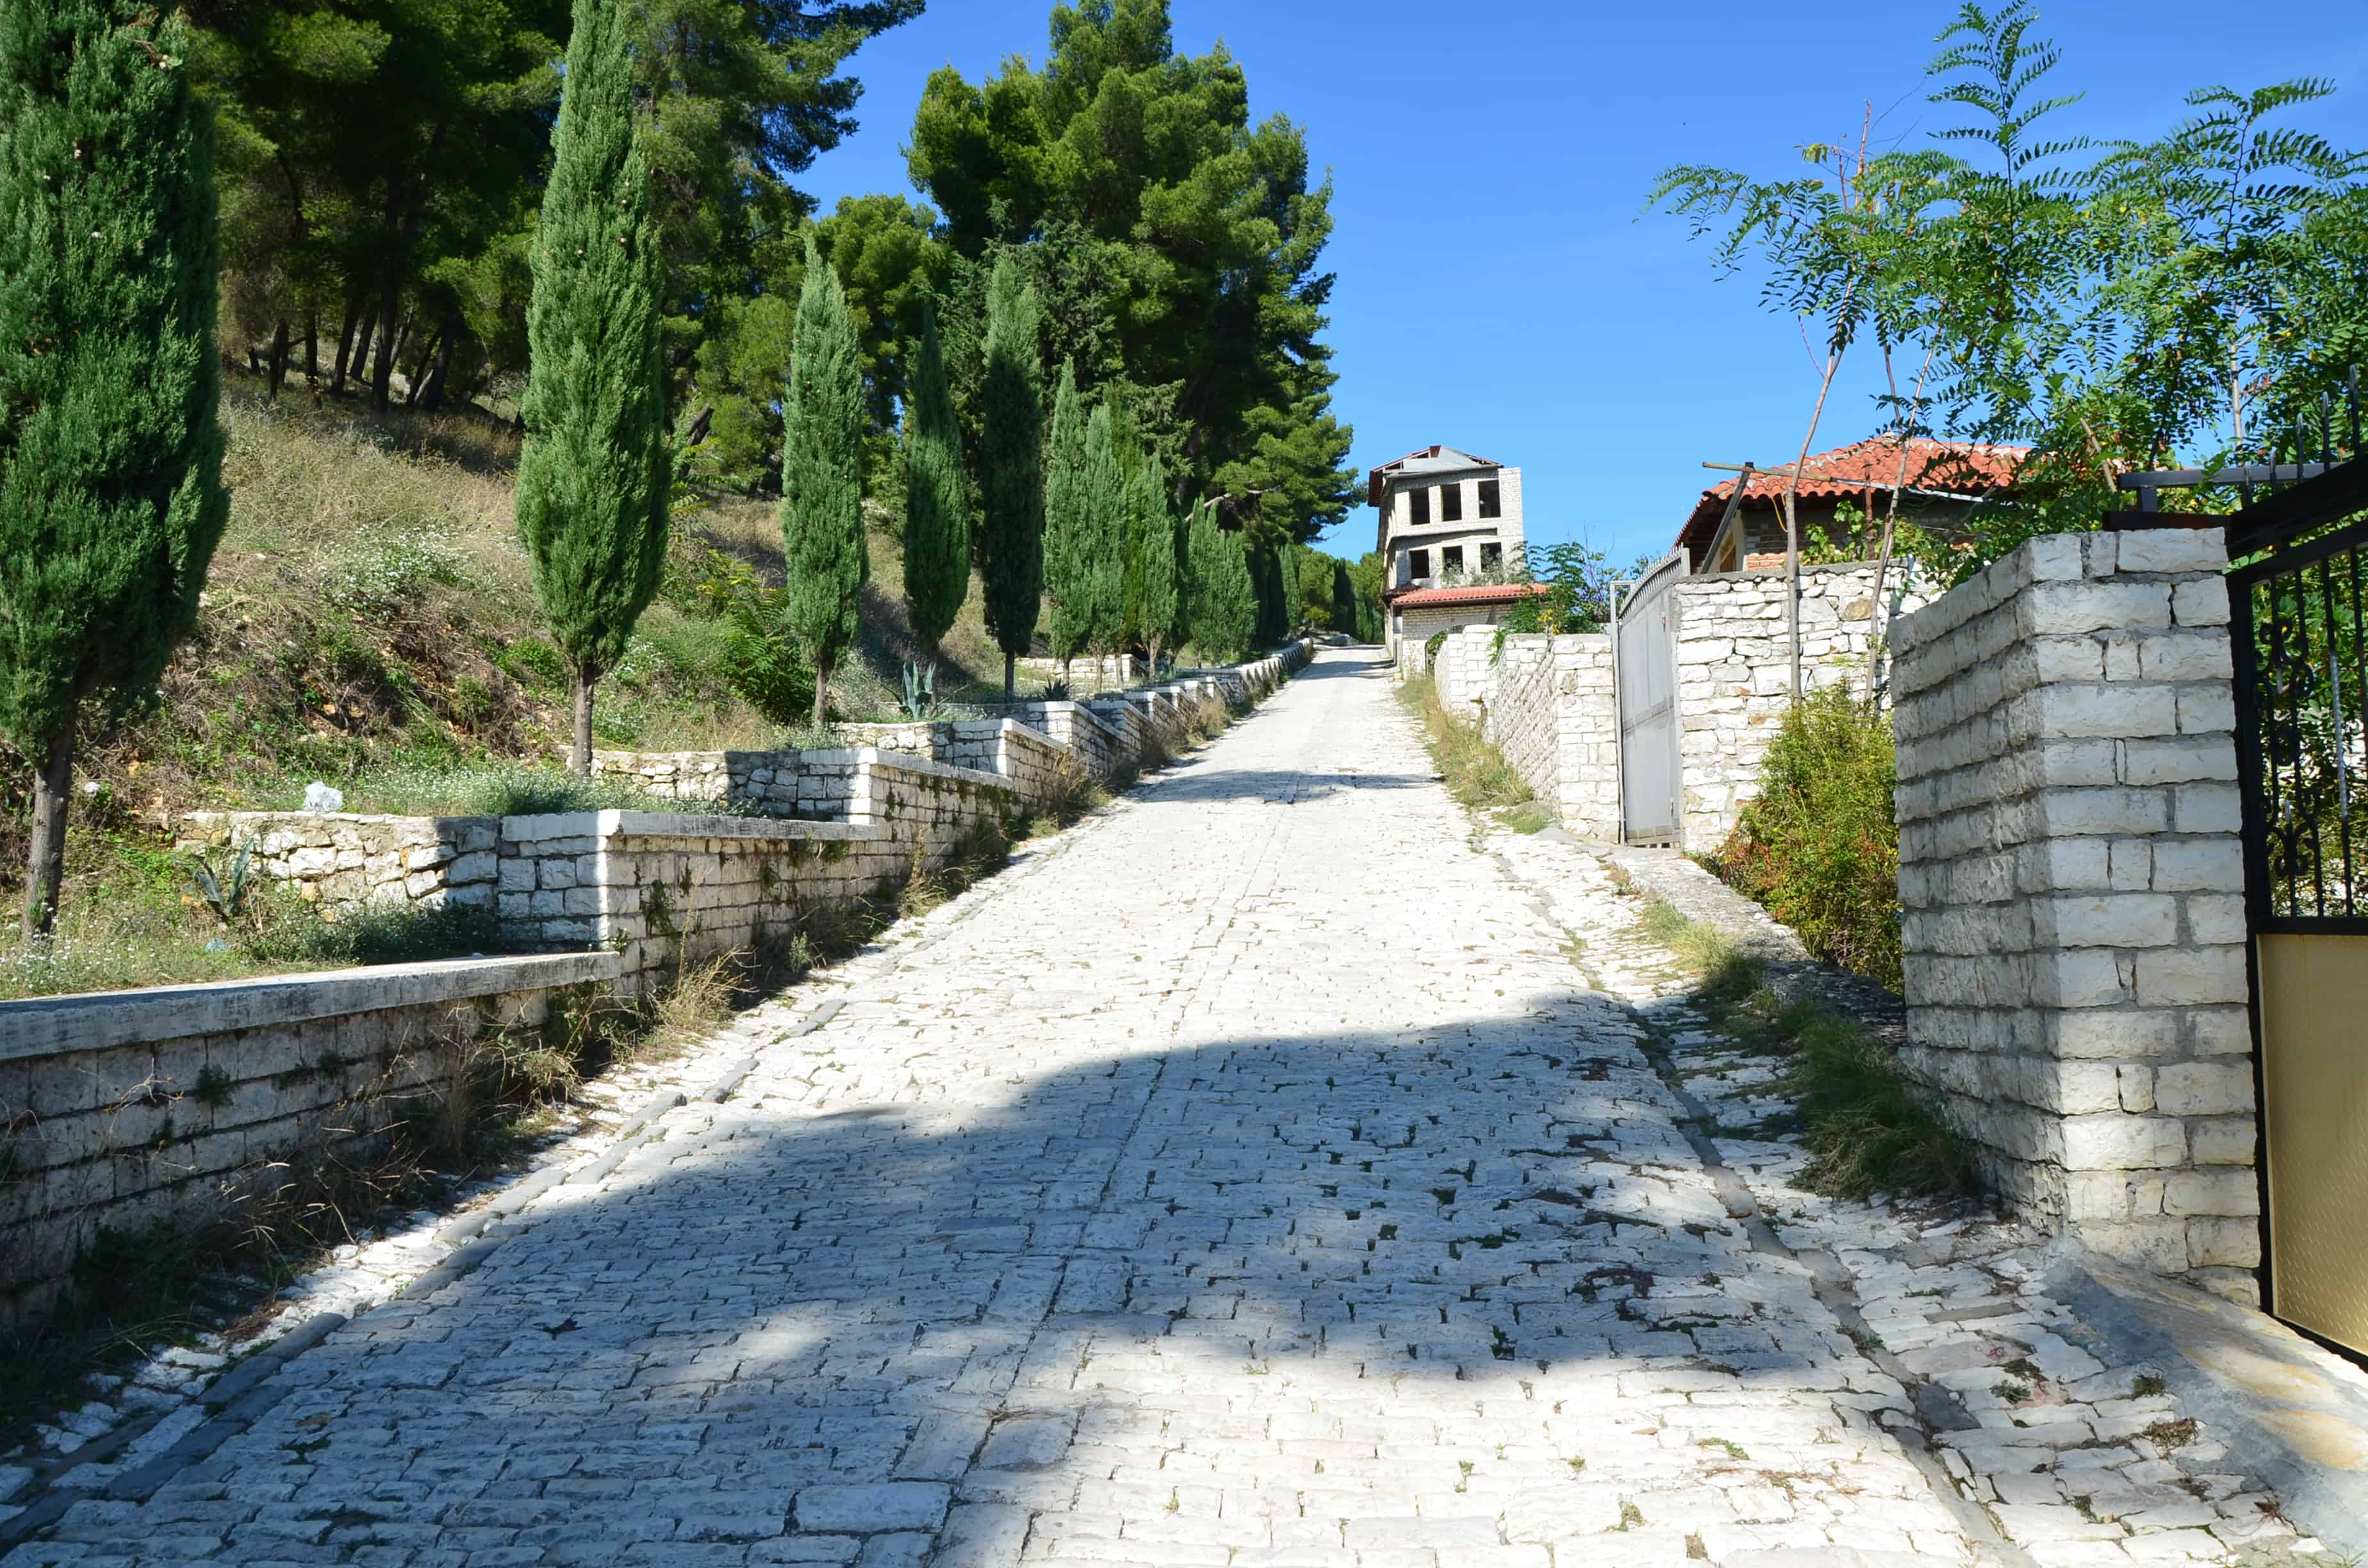 Walking up to Berat Castle in Berat, Albania